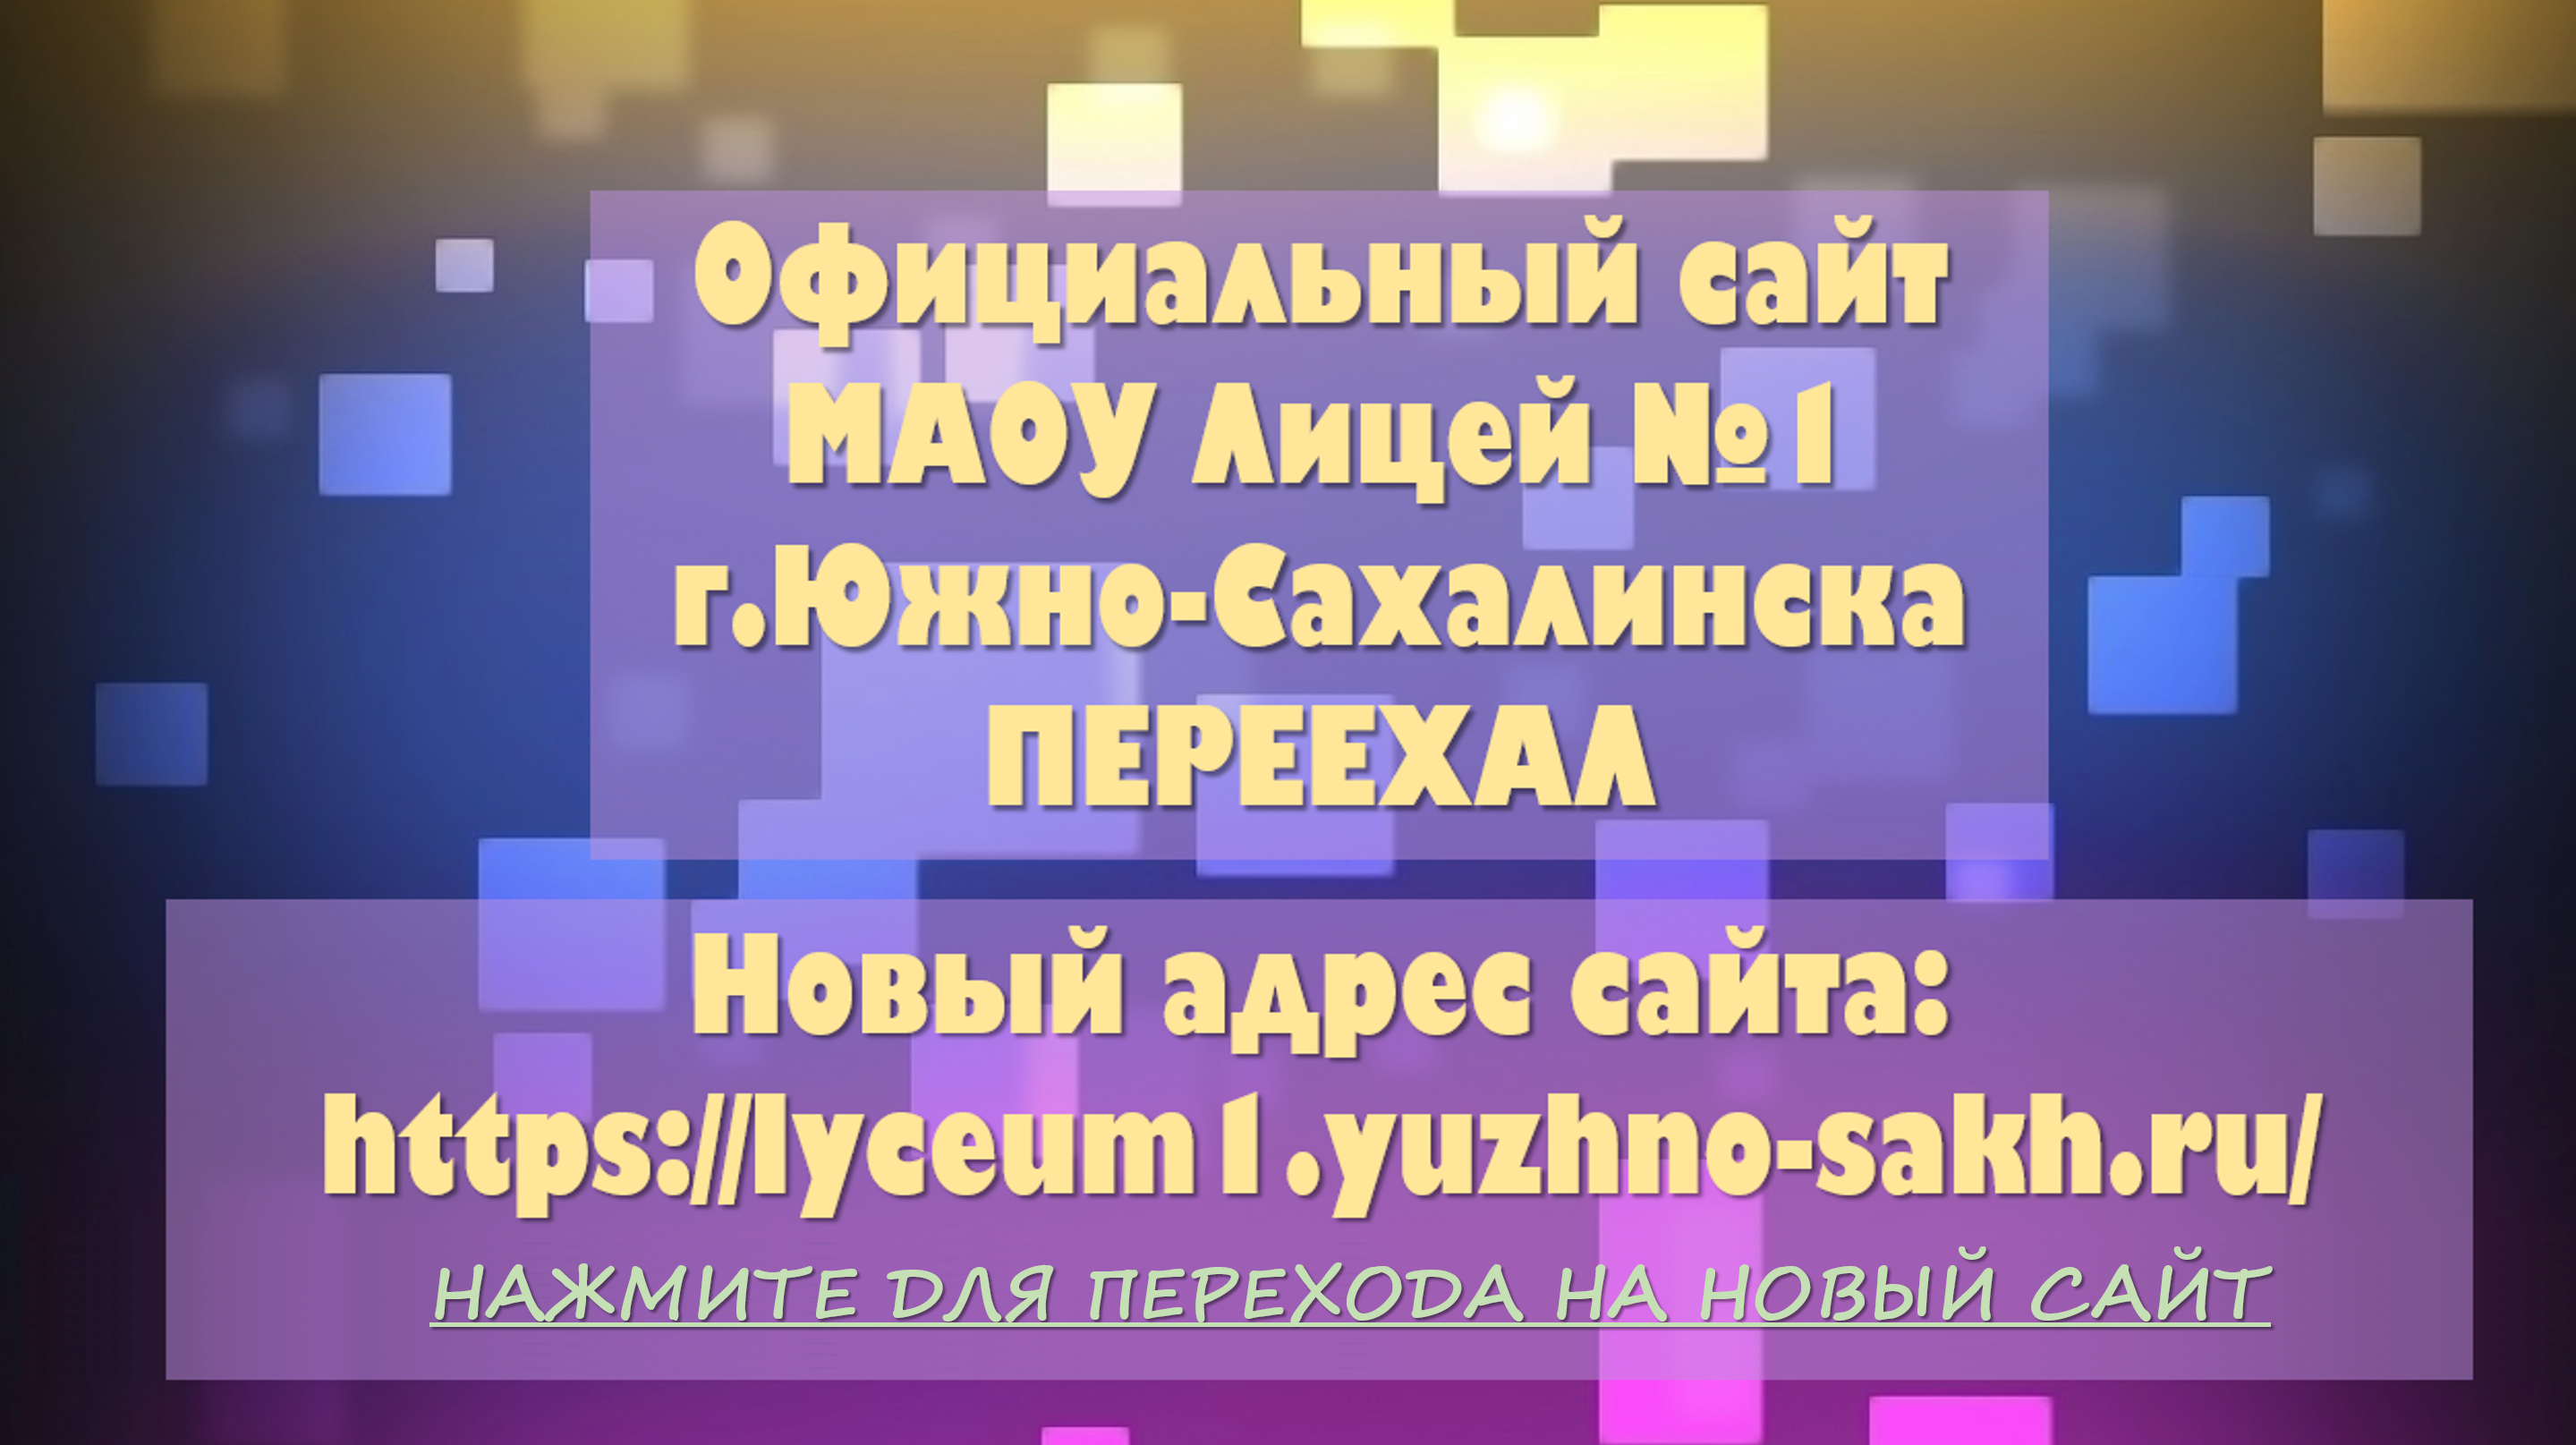 Новый адрес сайта: https://lyceum1.yuzhno-sakh.ru/